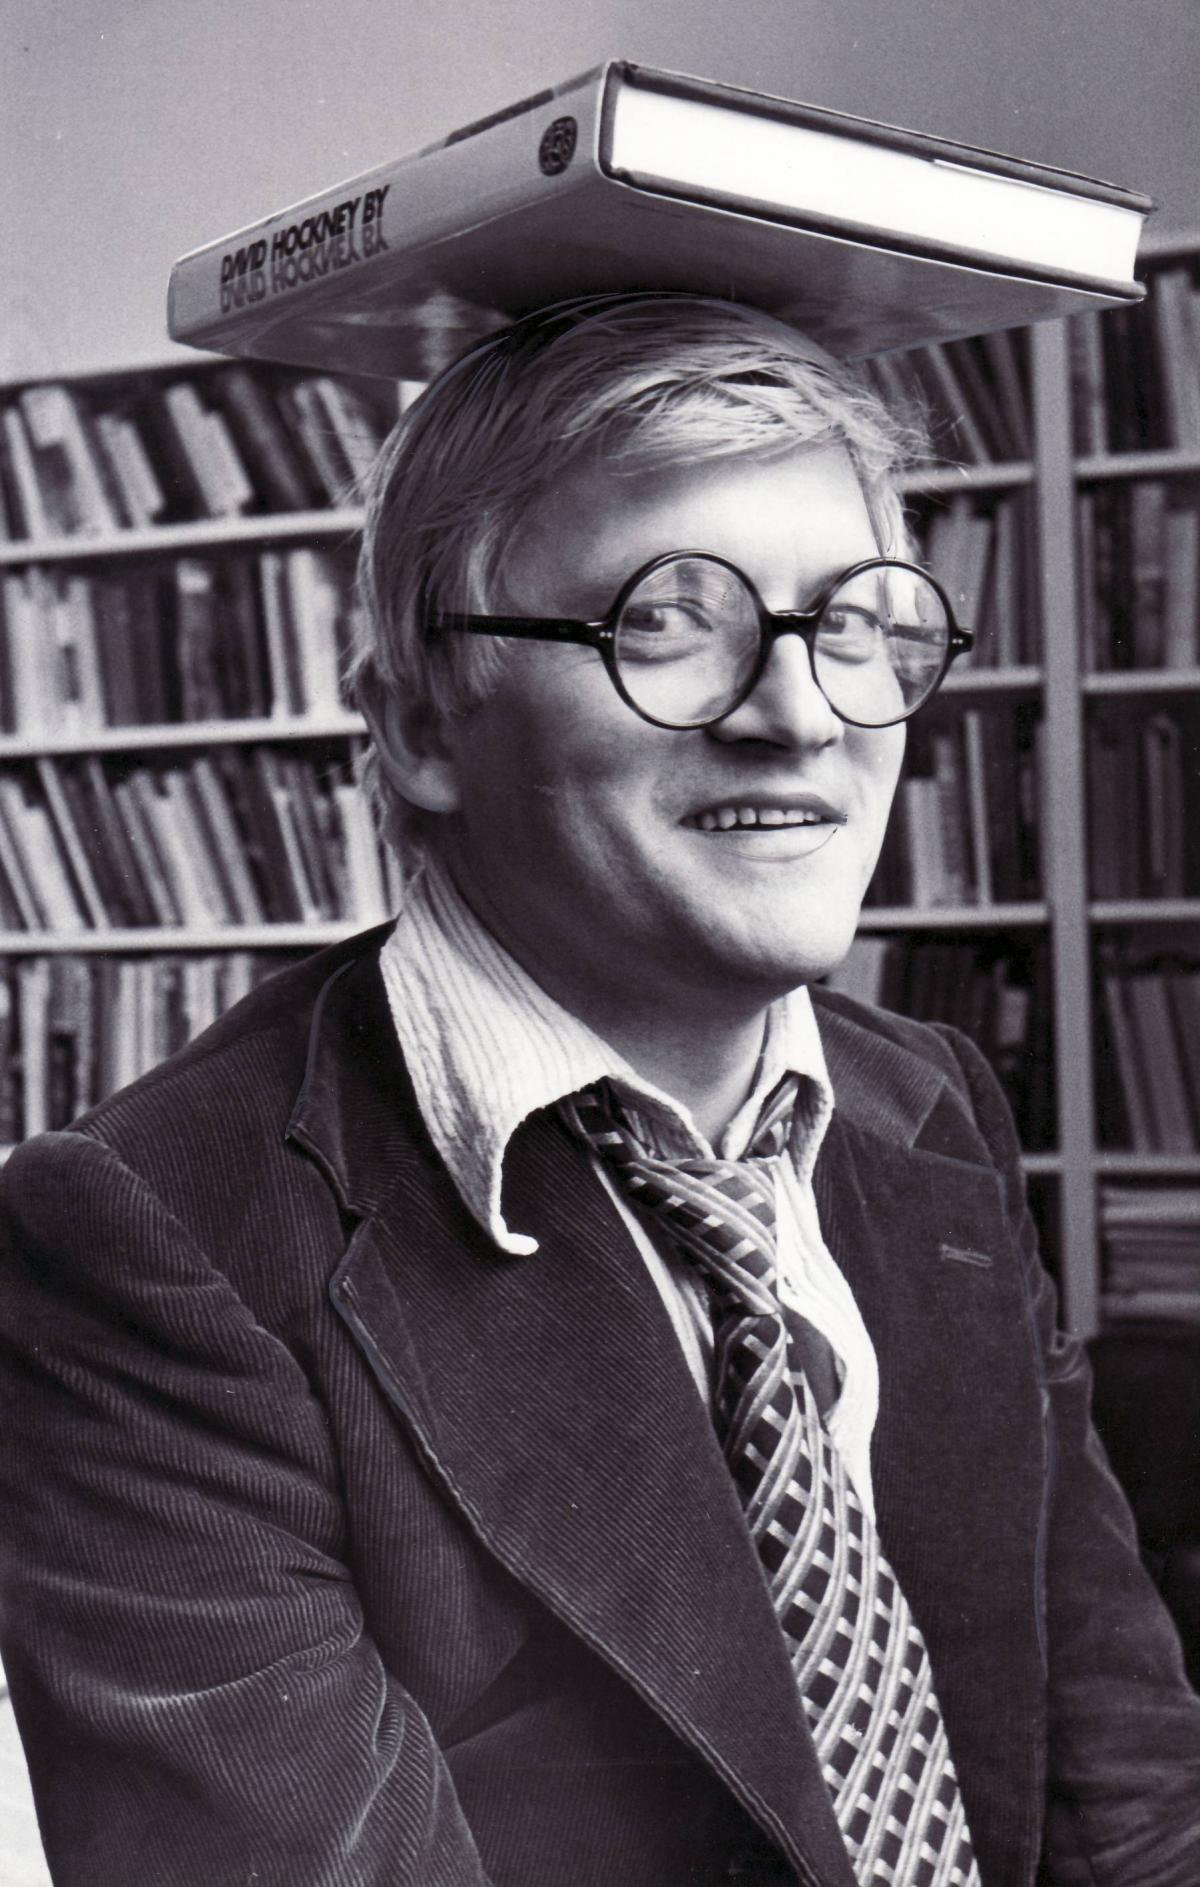 David Hockney pictured at  Bradford Central Library in 1976